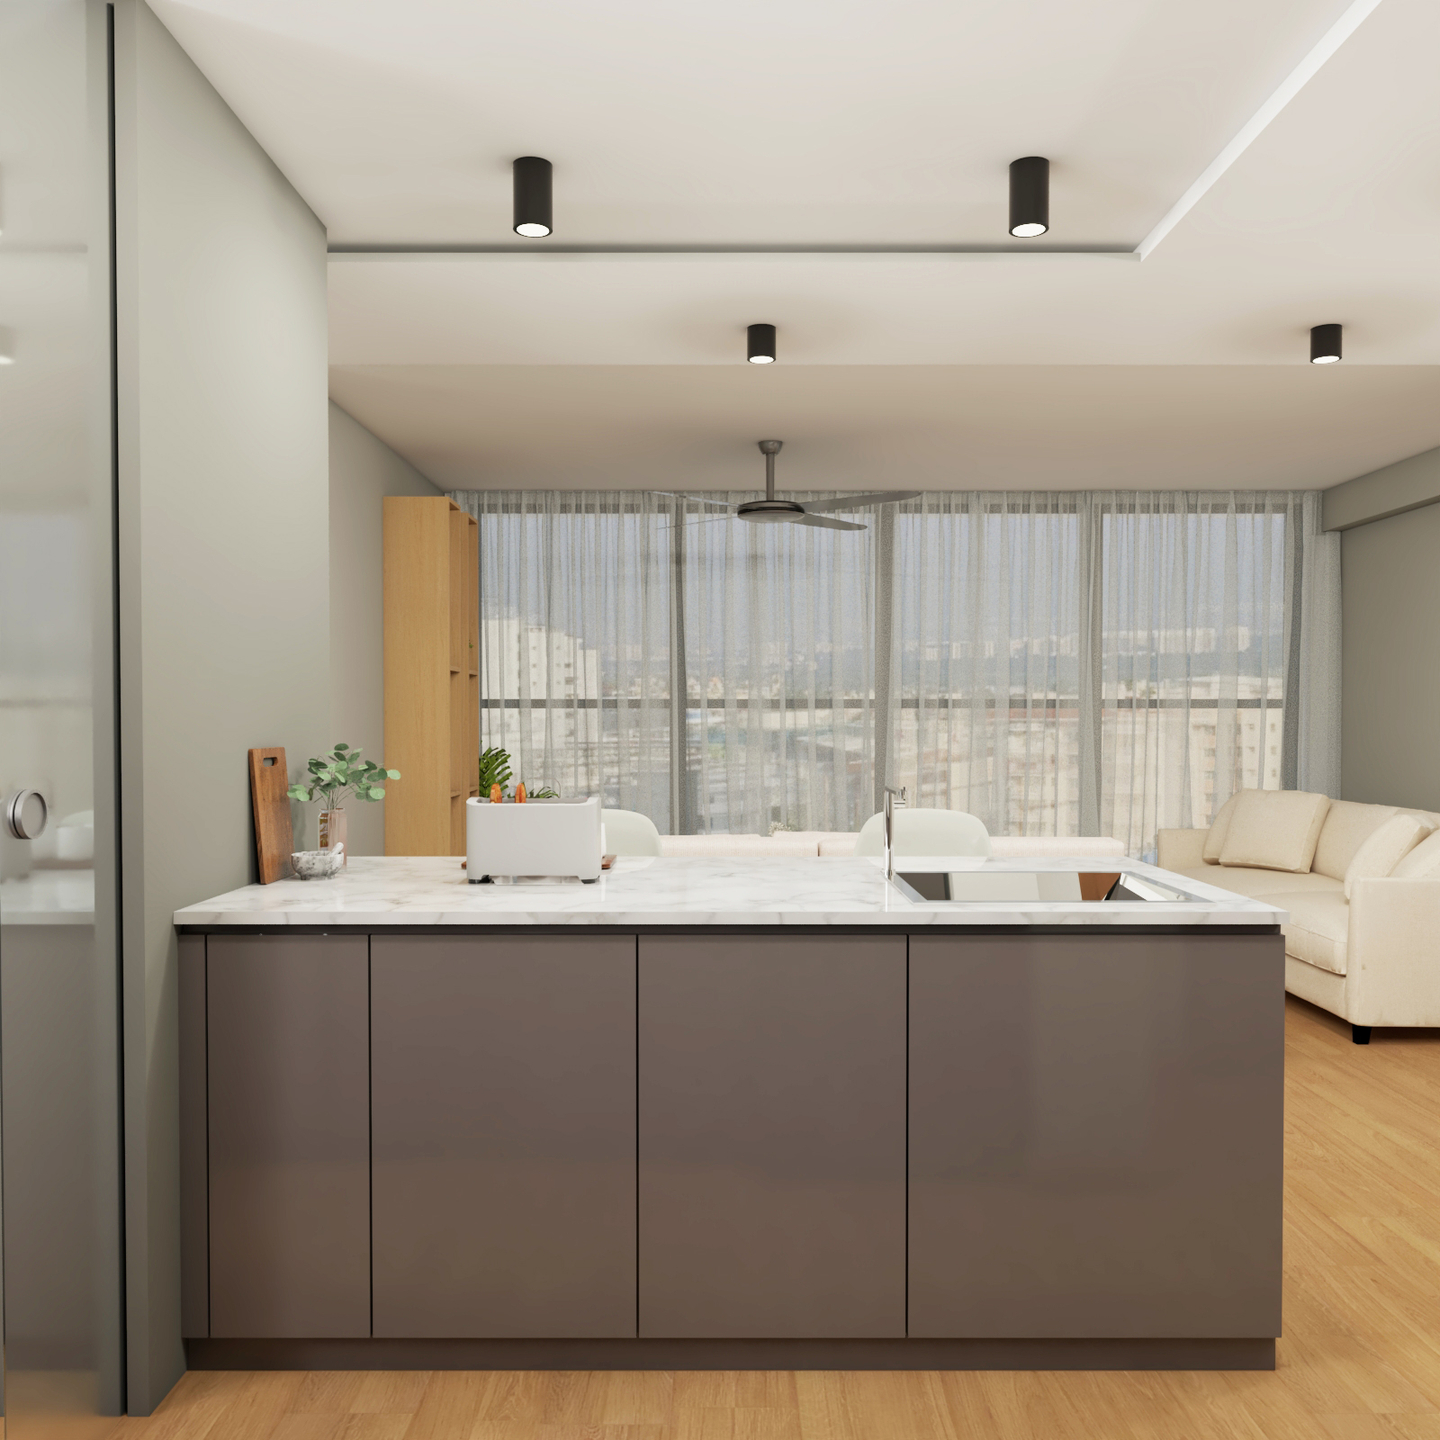 Modern Parallel Kitchen Cabinet Design In White And Grey